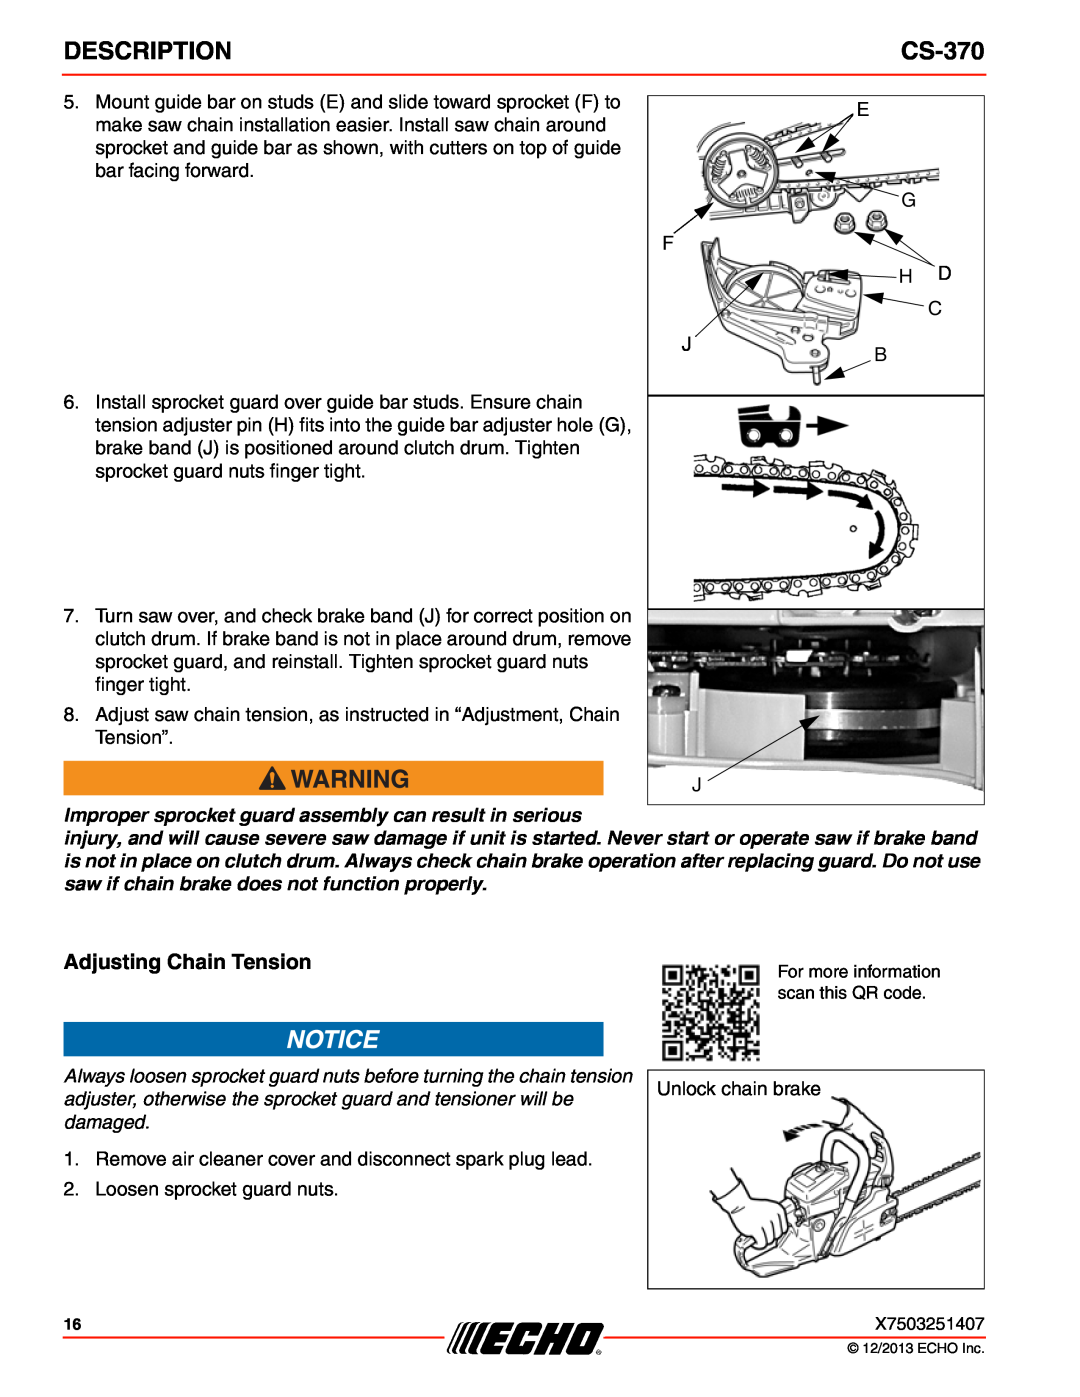 Echo CS-370 instruction manual Adjusting Chain Tension, Description 